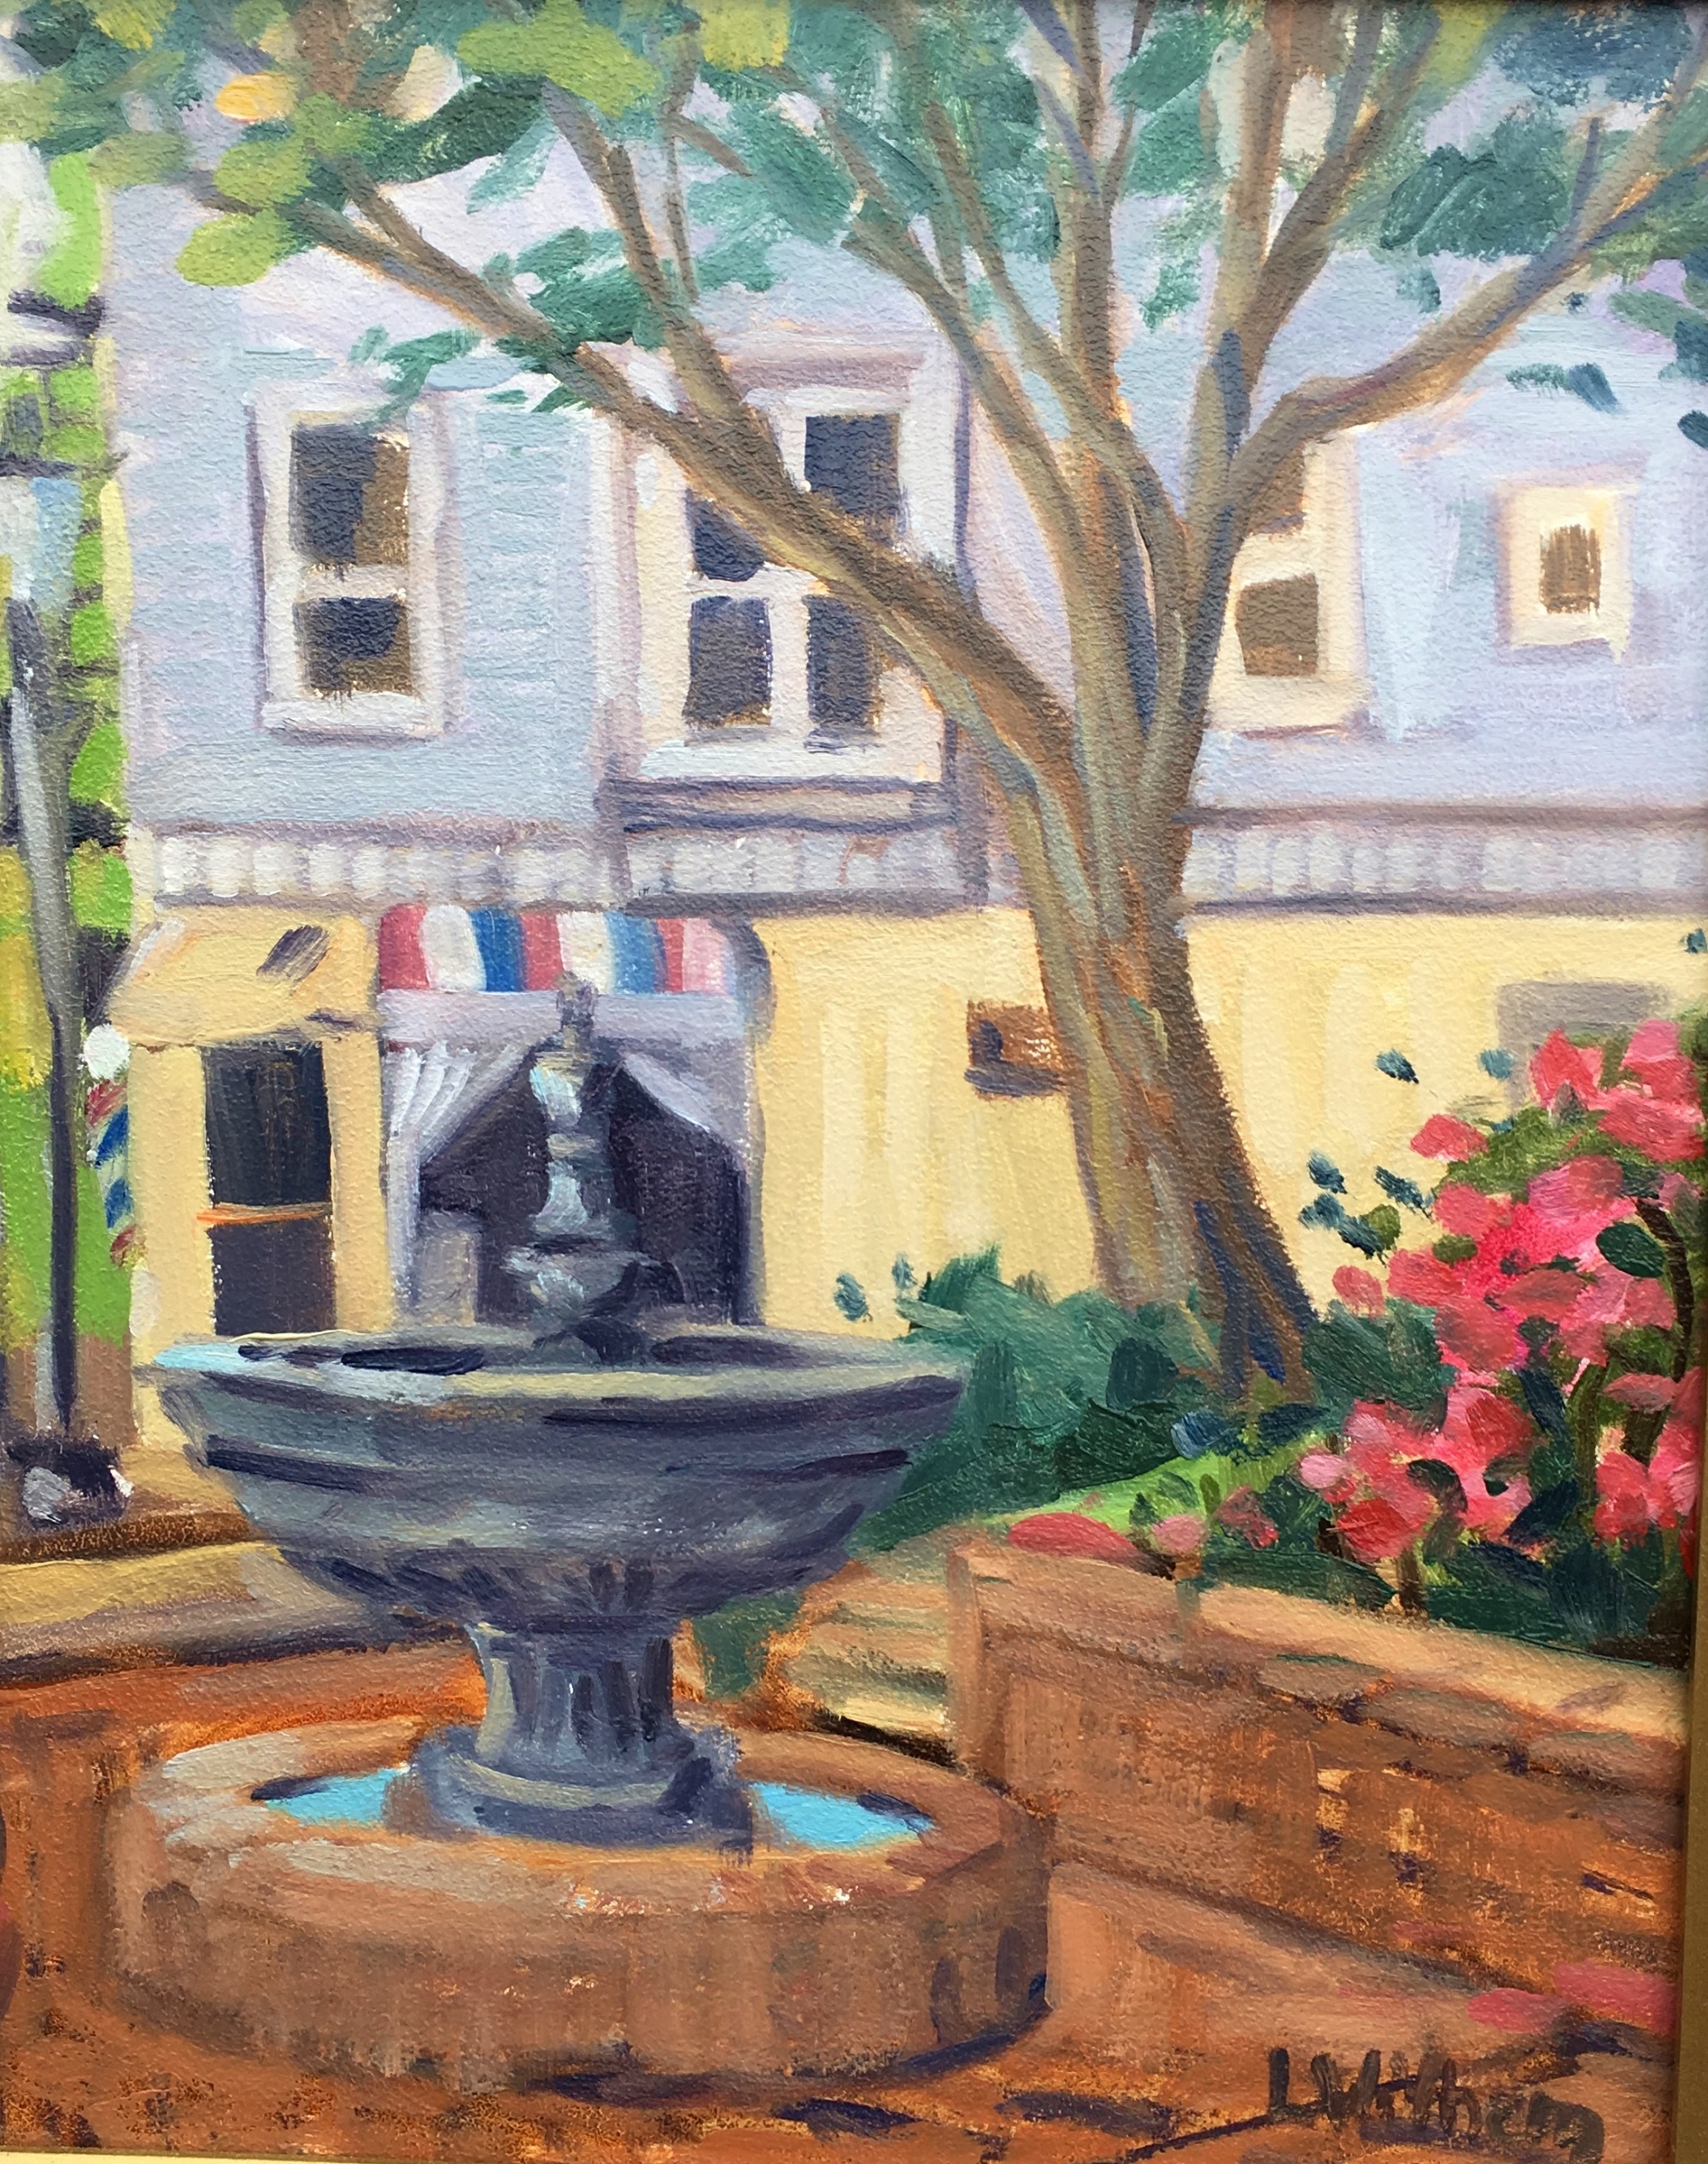 Bel Air Fountain, Oil on linen, 9x12